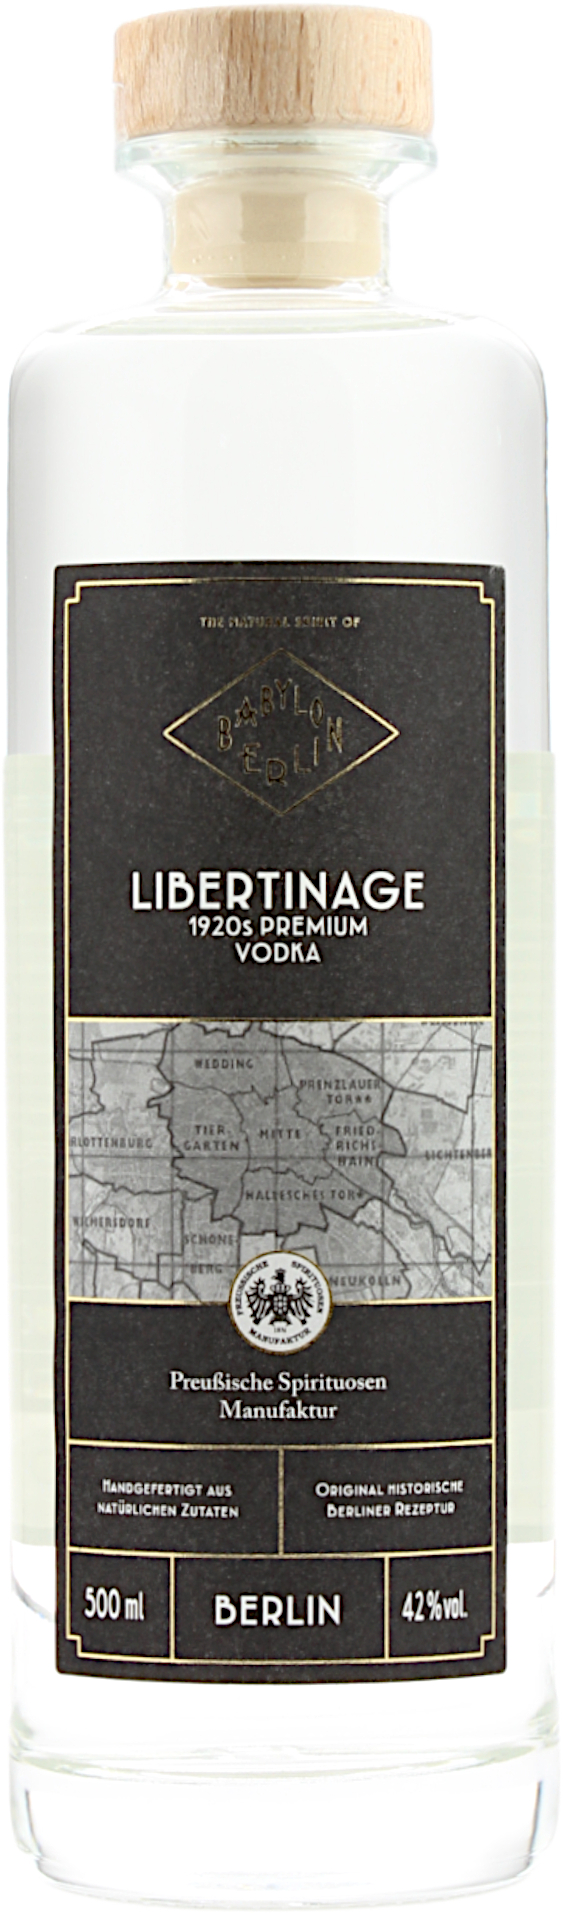 Babylon Berlin Libertinage 1920s Premium Vodka 42.0% 0,5l